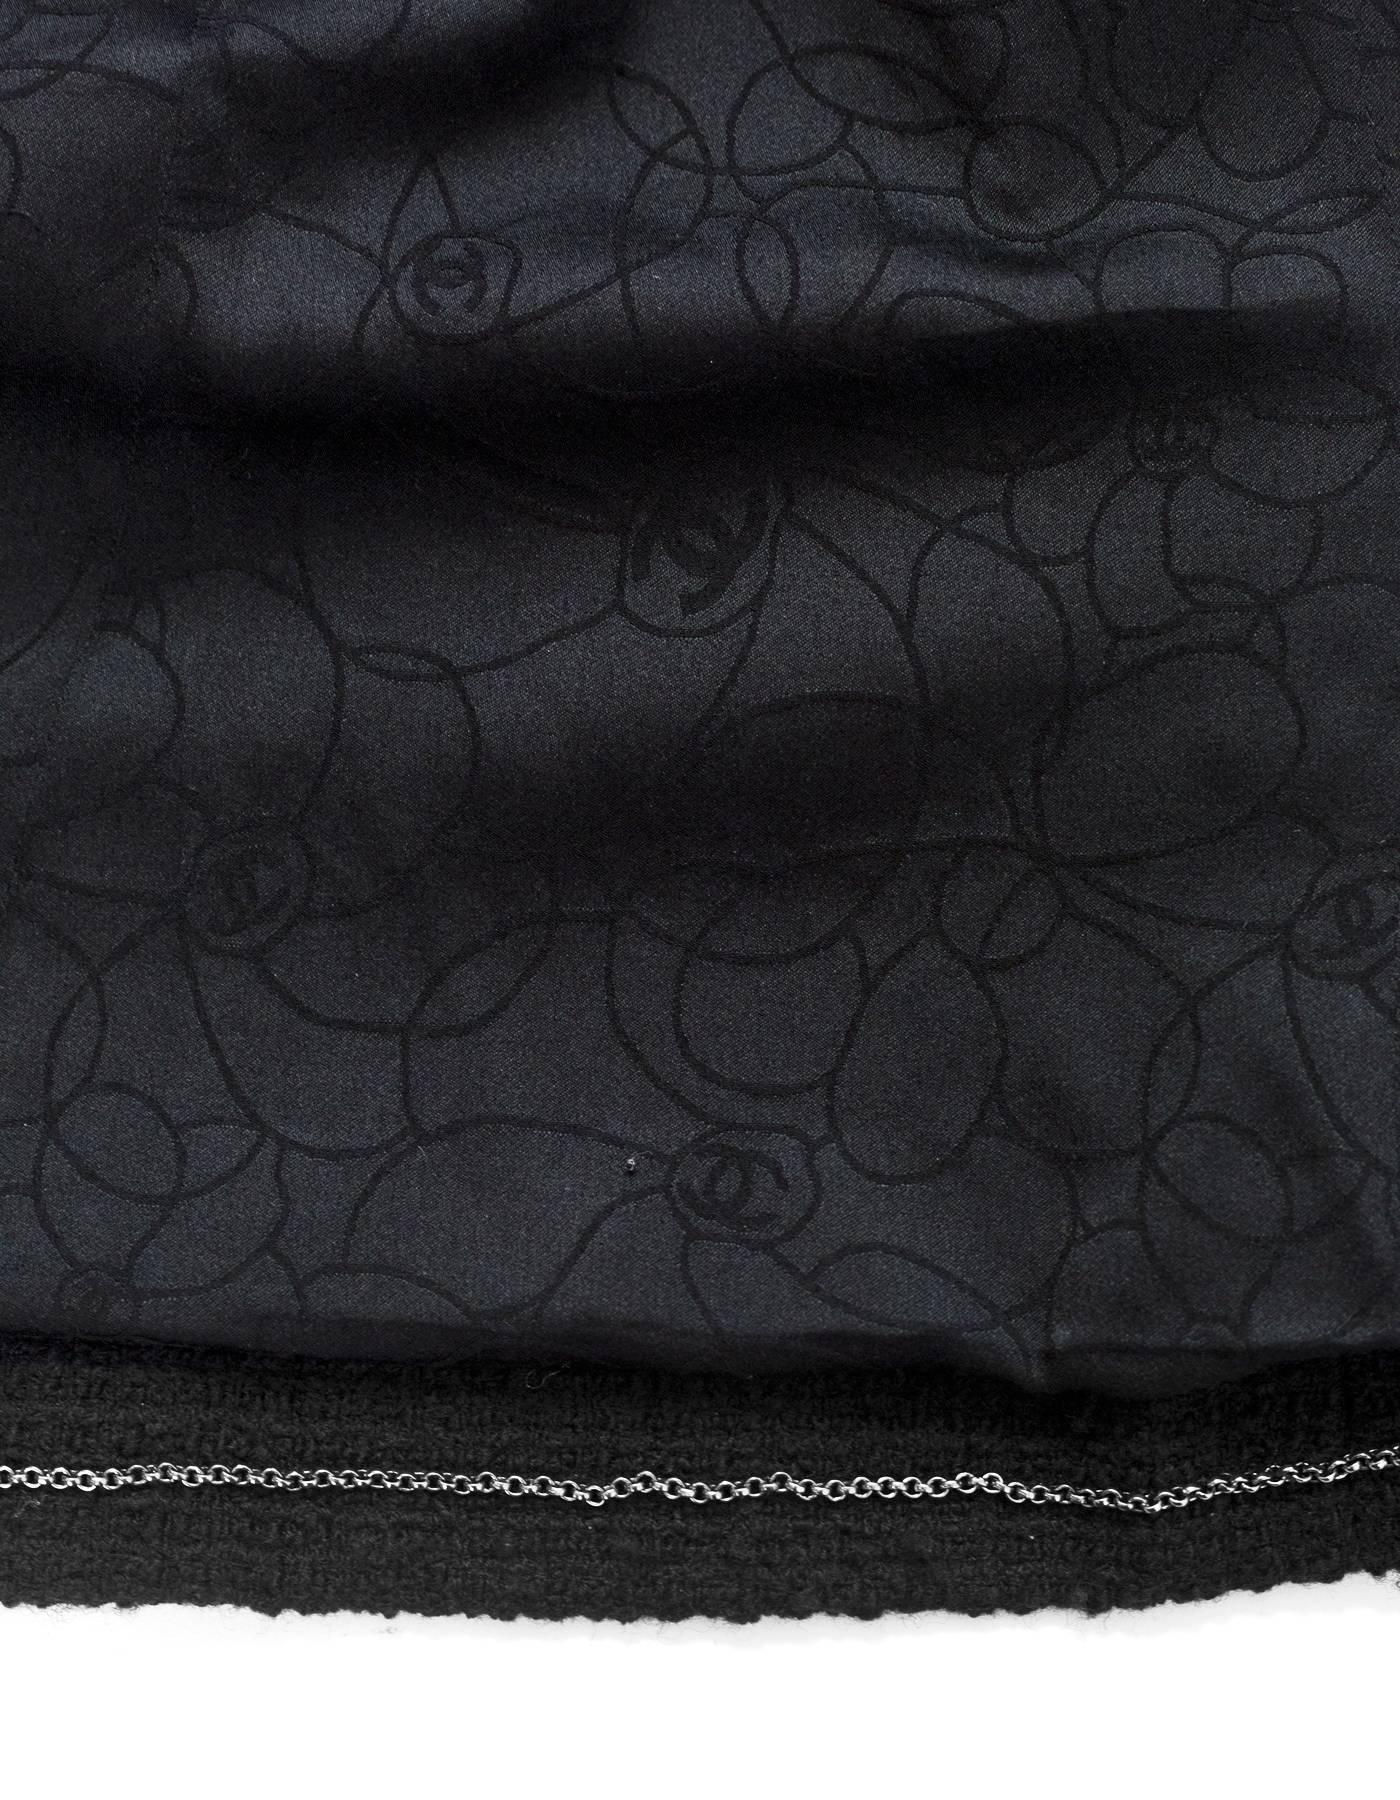 Chanel Black Boucle Jacket sz FR46 3